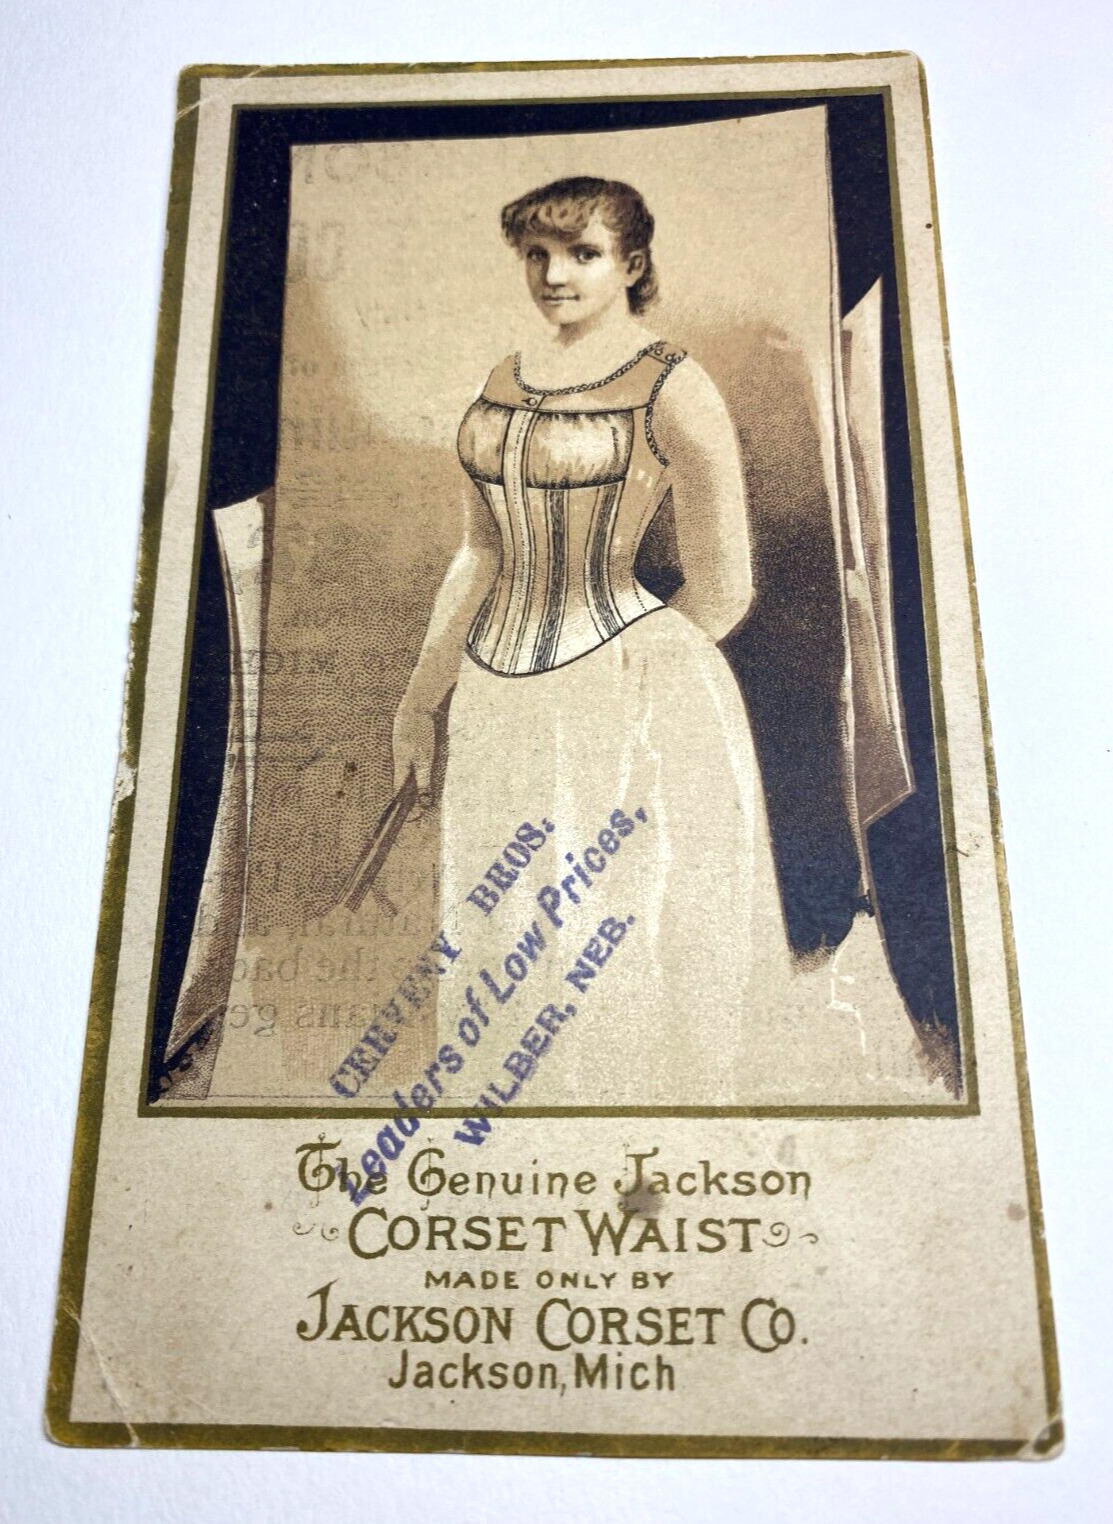 1880s The genuine Jackson corset waist advertising card